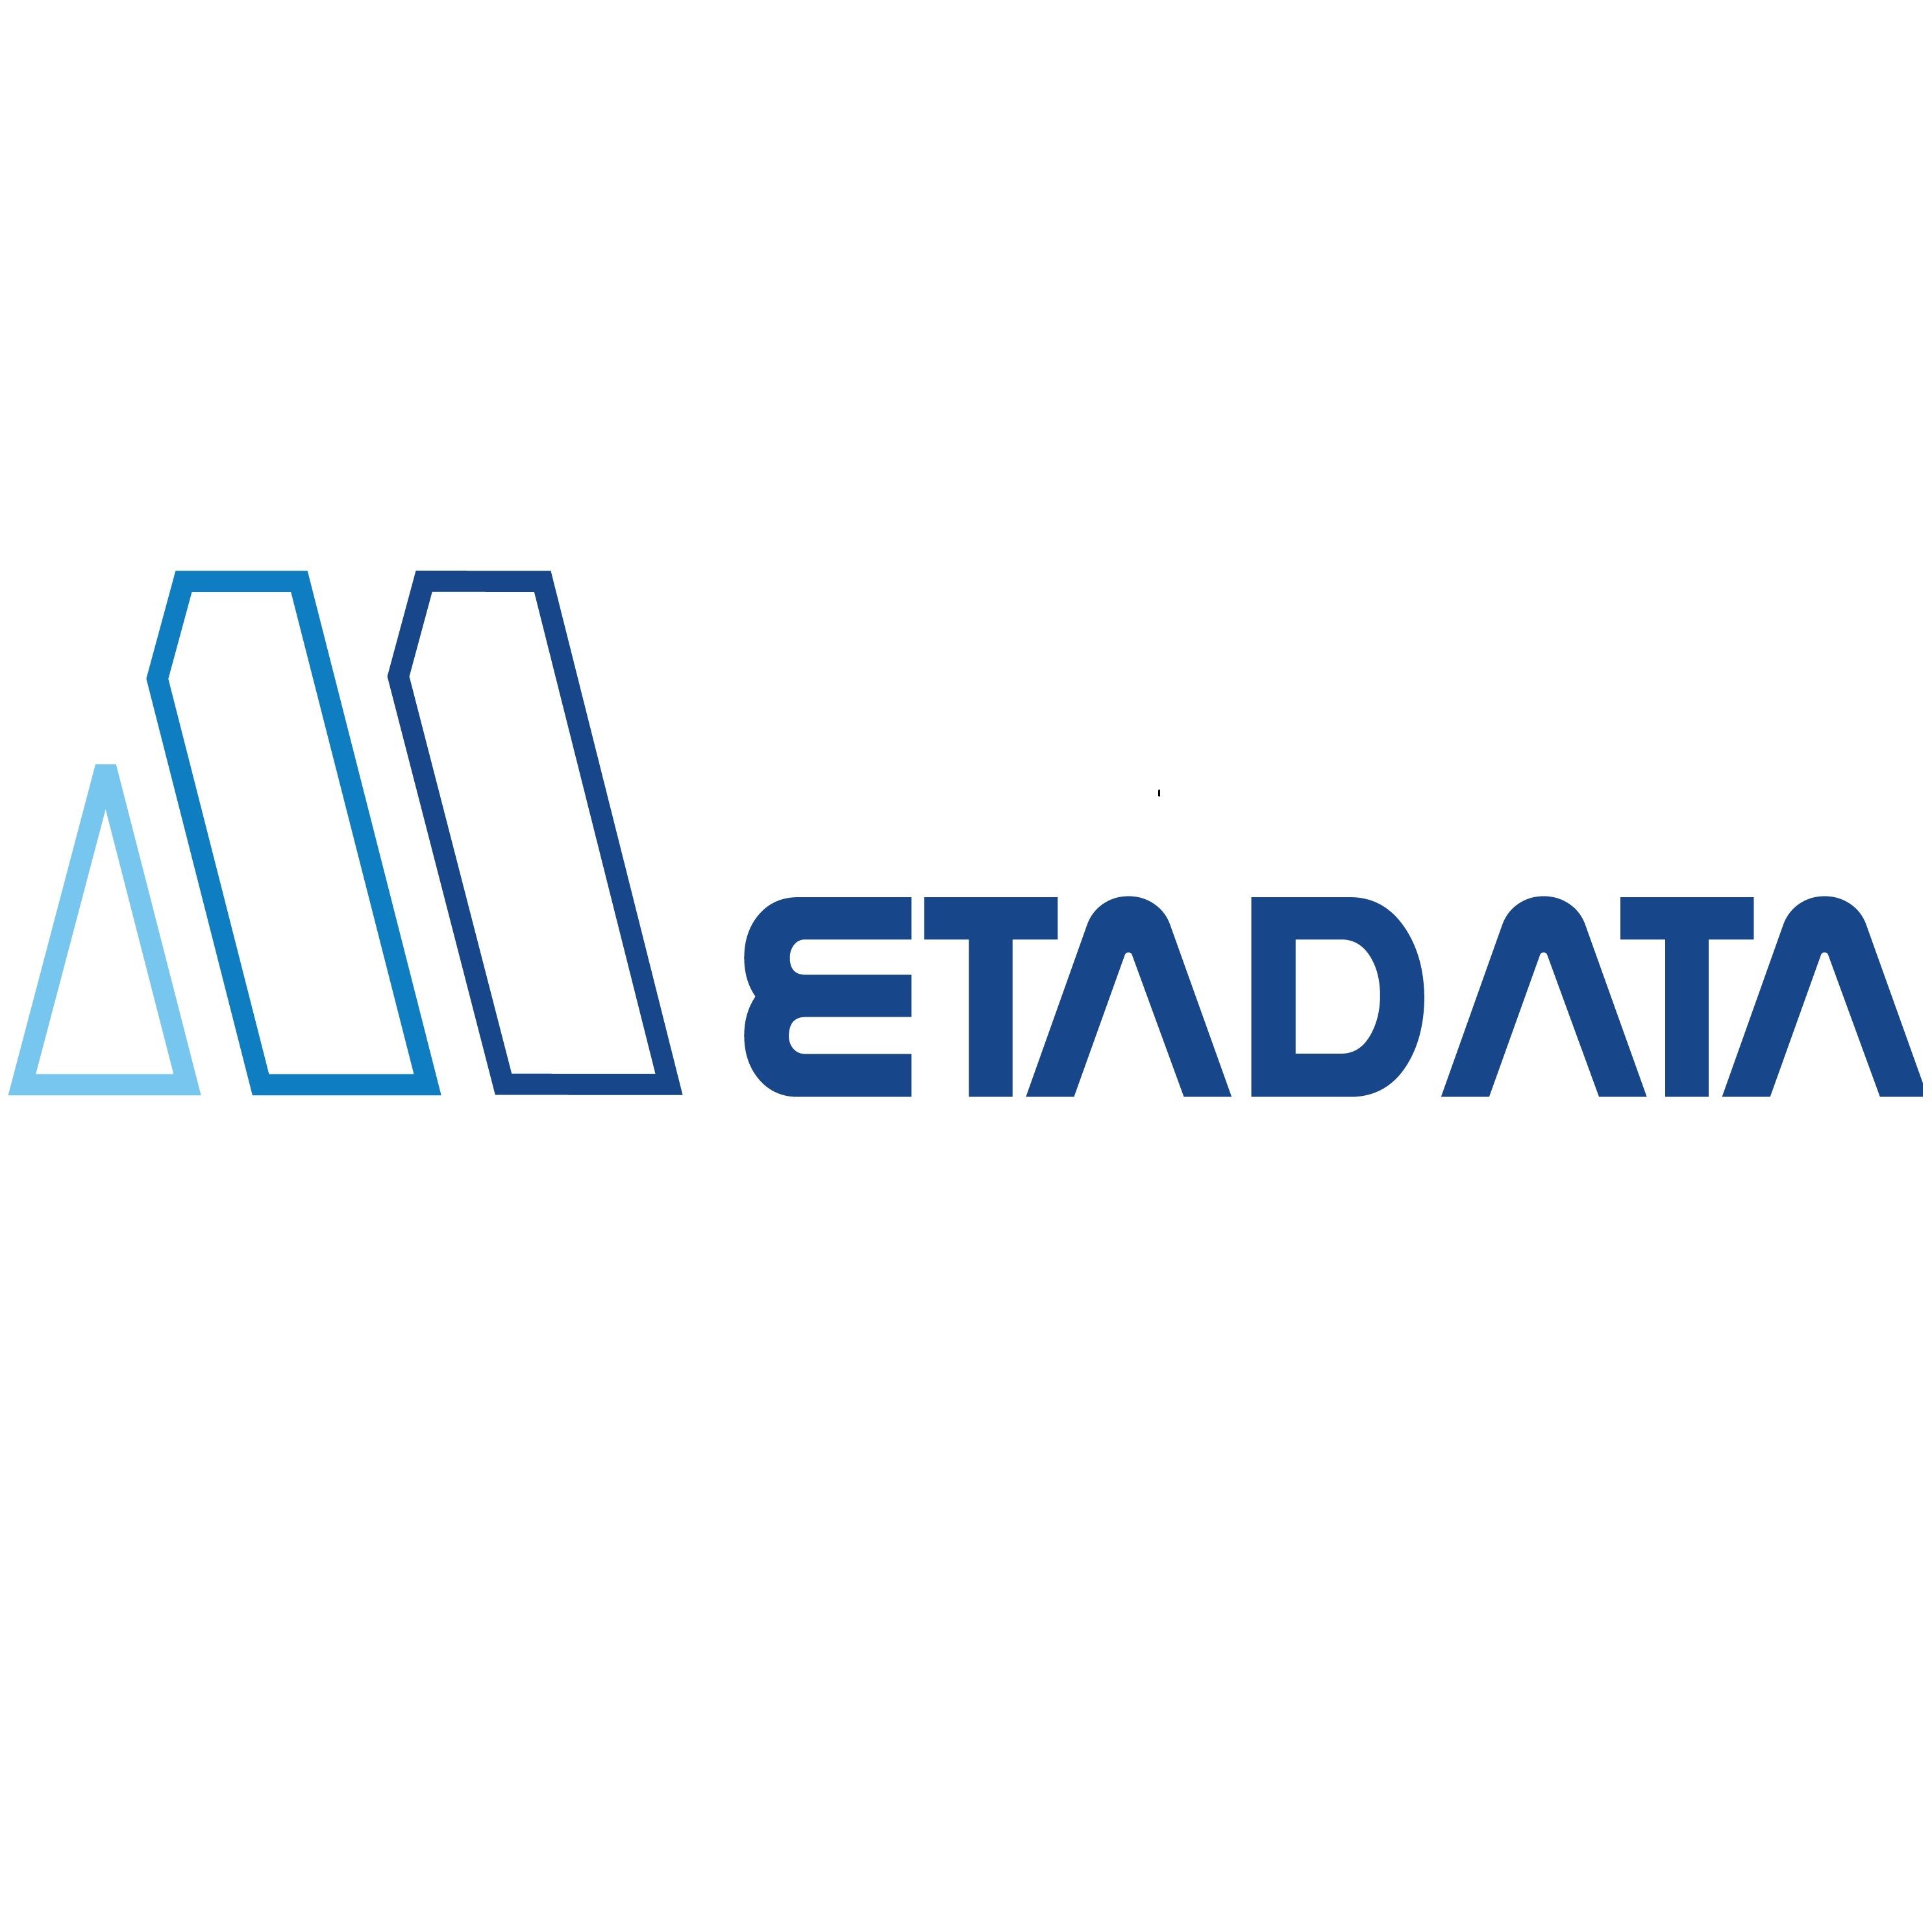 Metadata logo